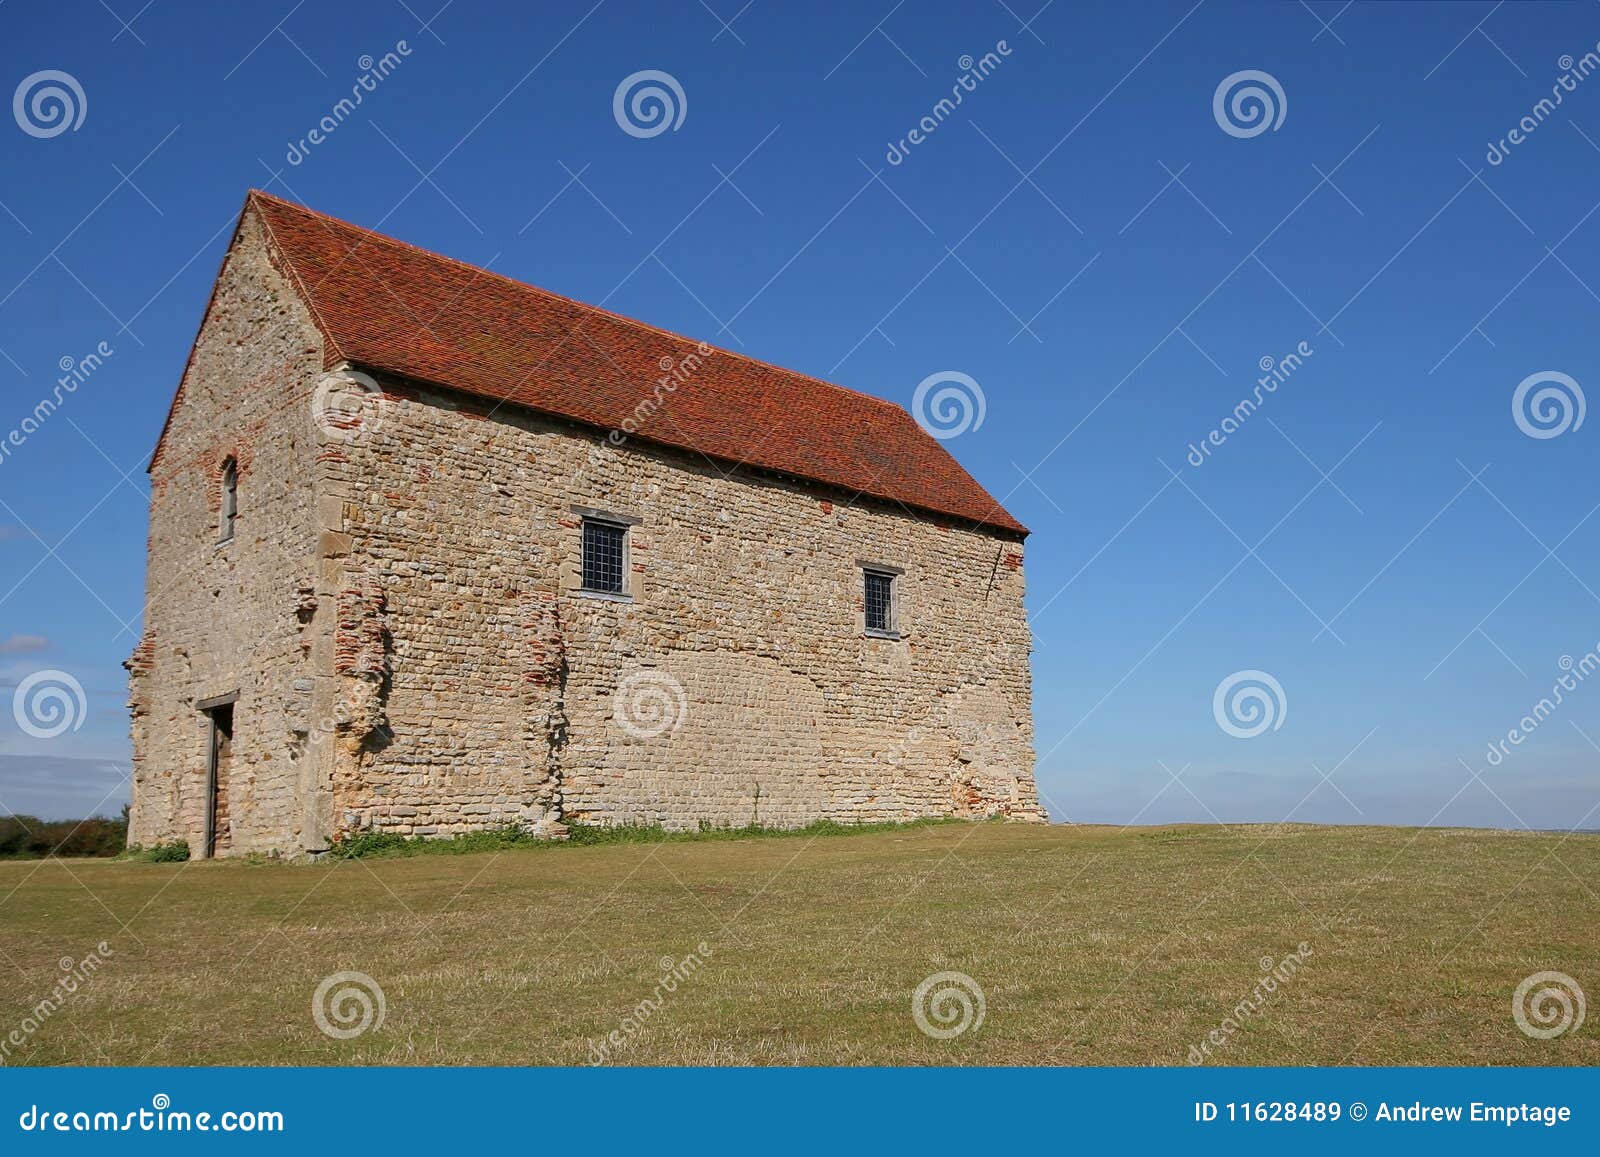 anglo saxon church